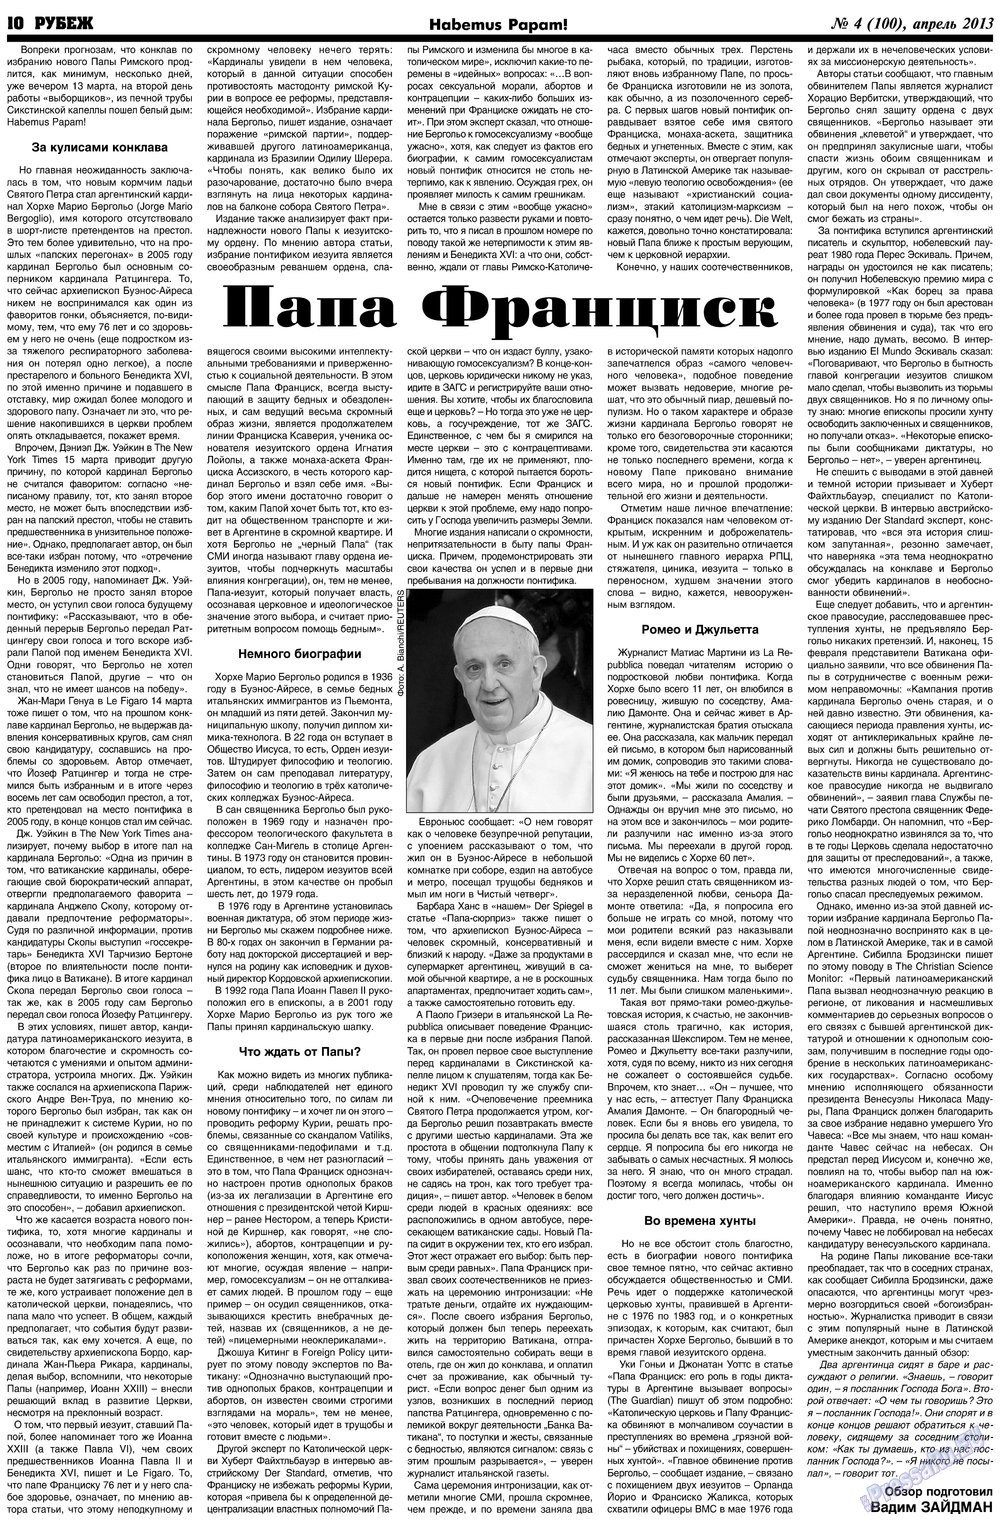 Рубеж, газета. 2013 №4 стр.10